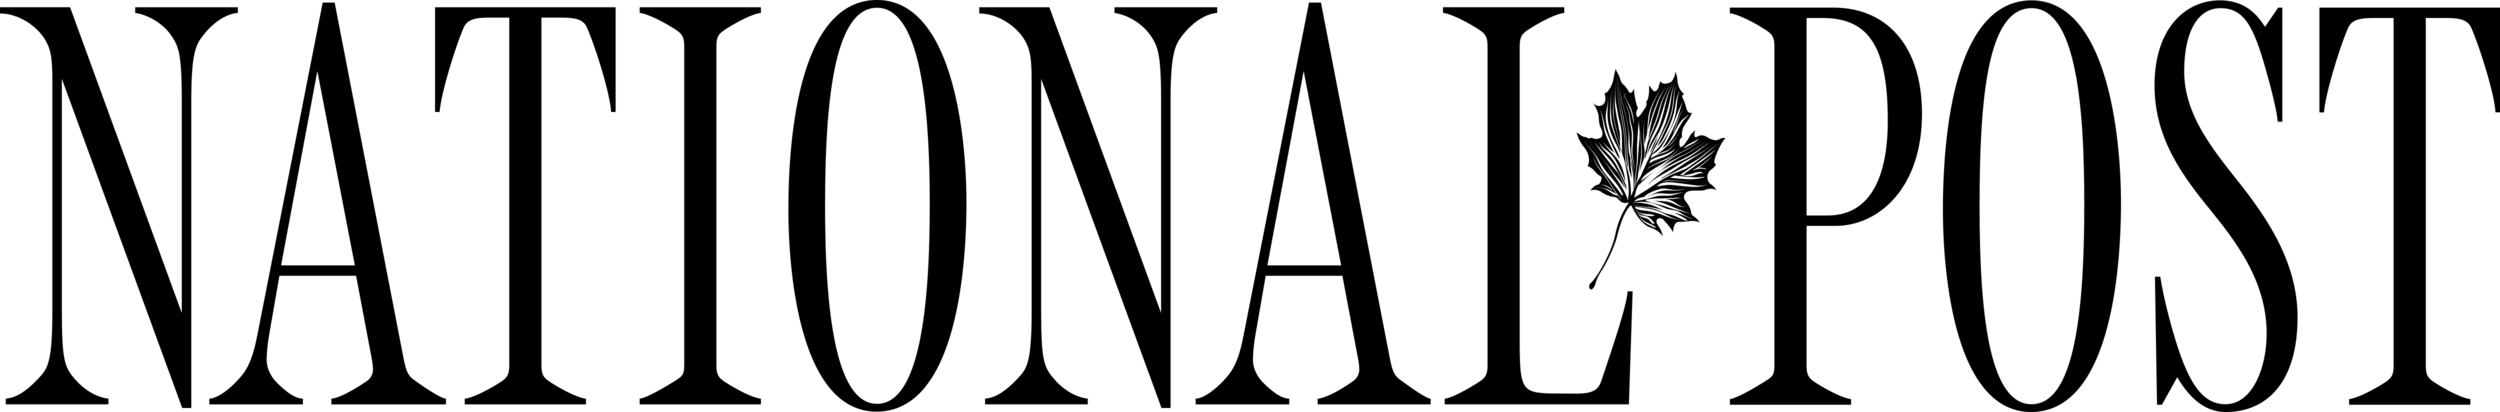 National Post Logo.png